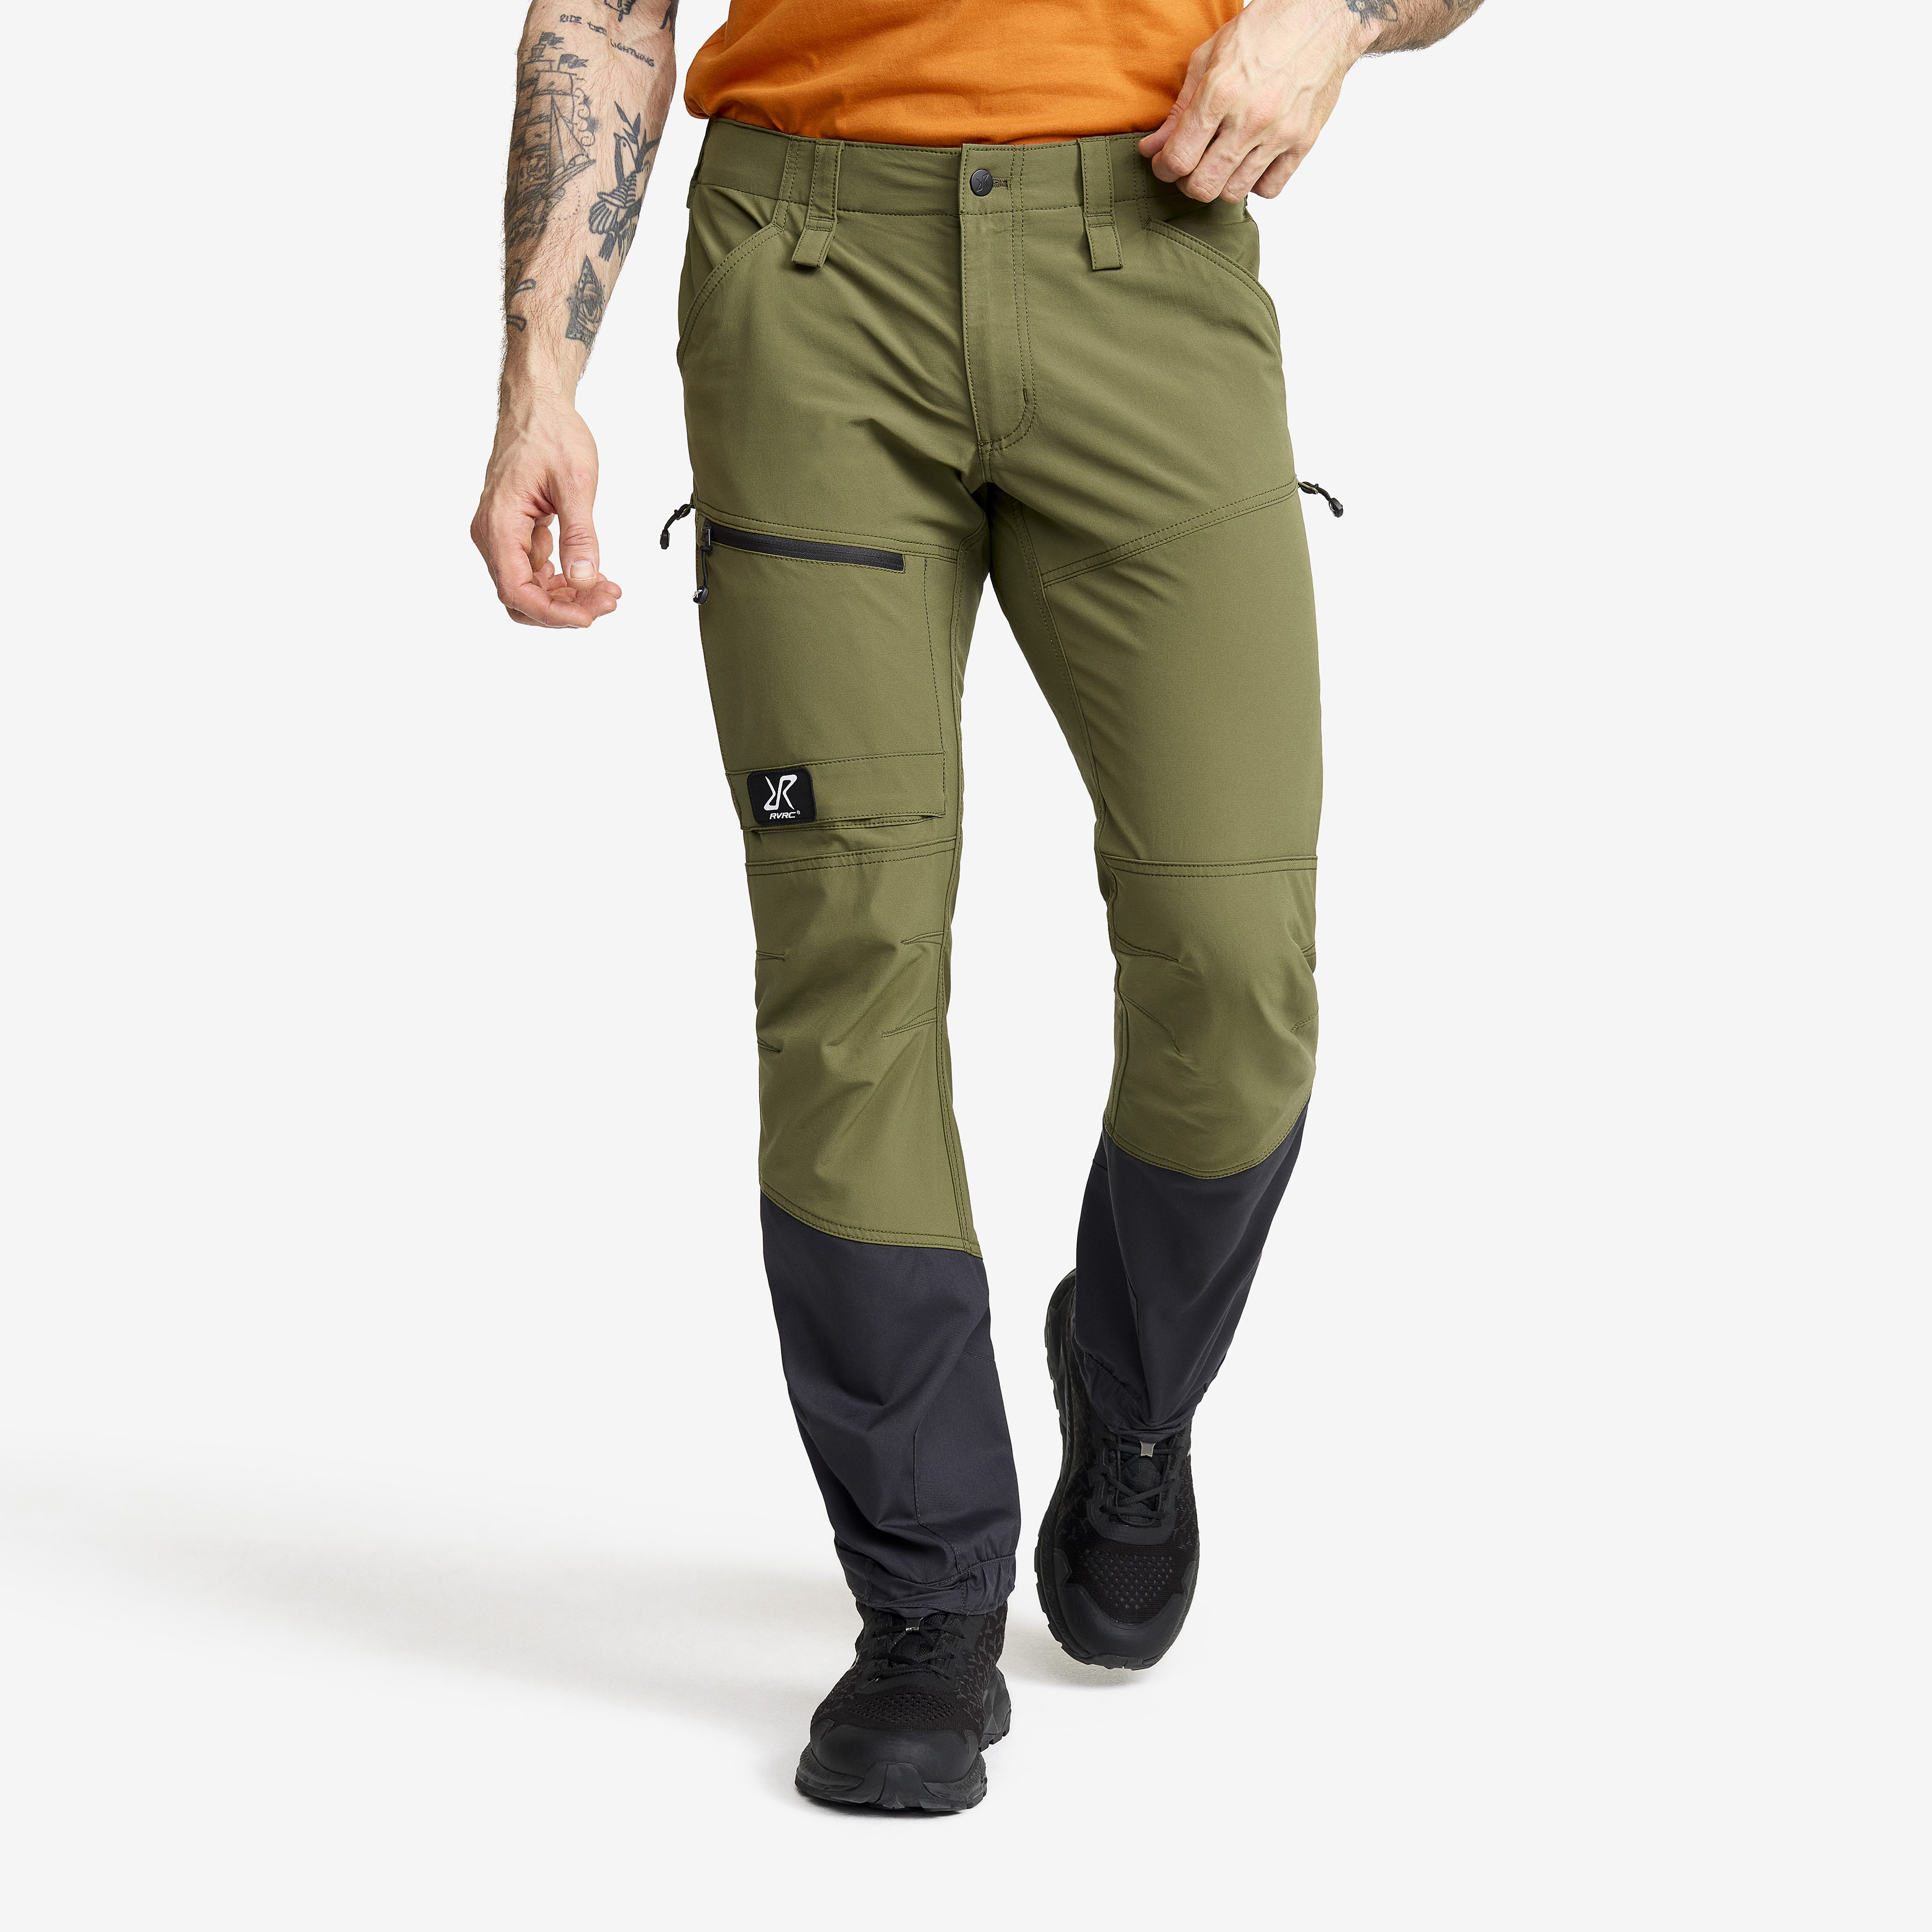 Range Pro Trousers Burnt Olive/Anthracite Men